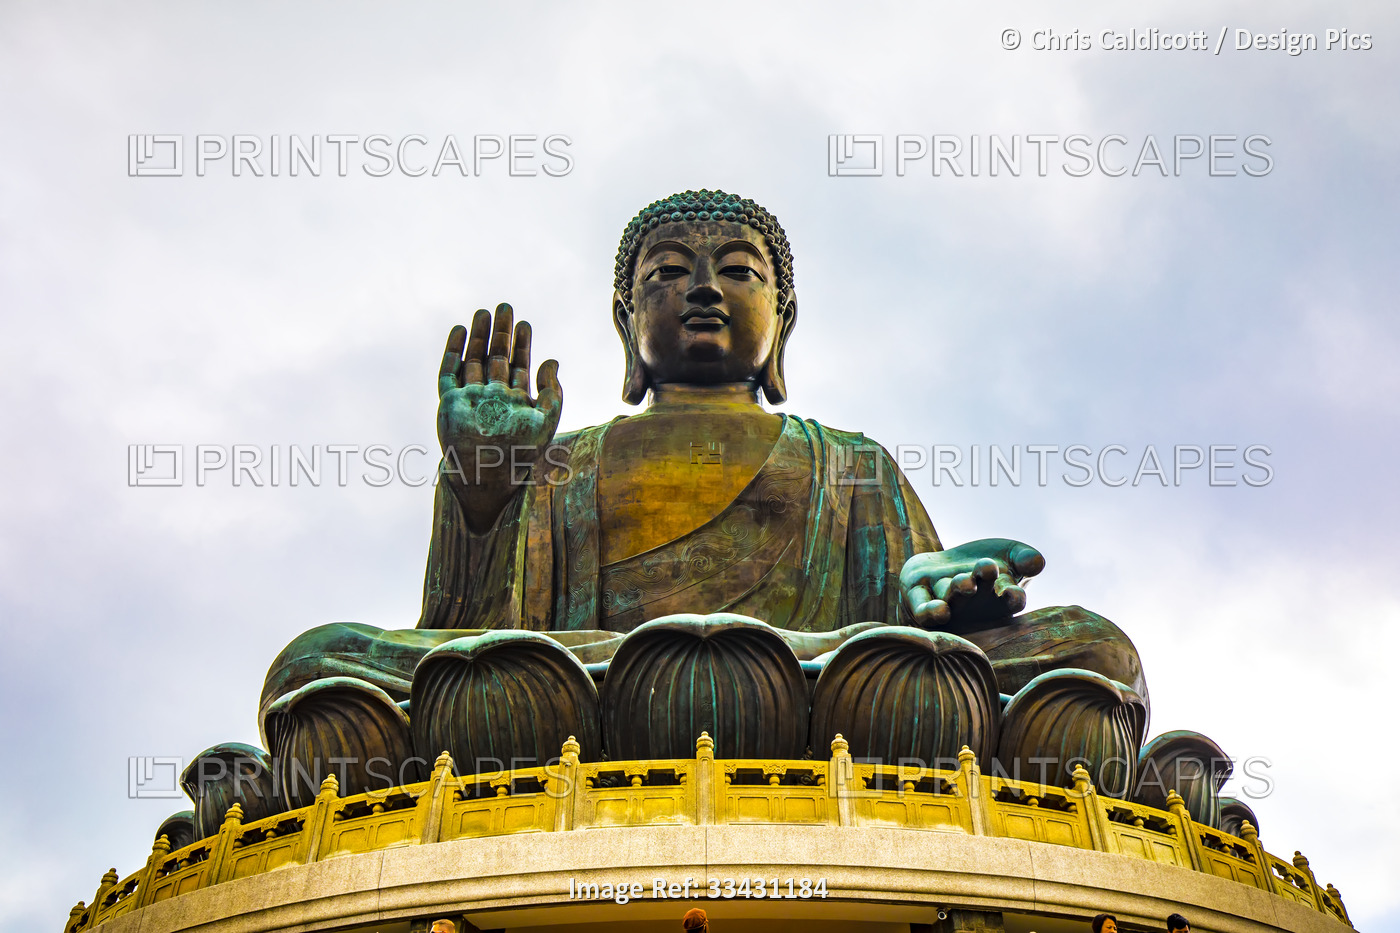 Tian Tan Buddha is a large bronze statue of Buddha Shakyamuni located in Ngong ...